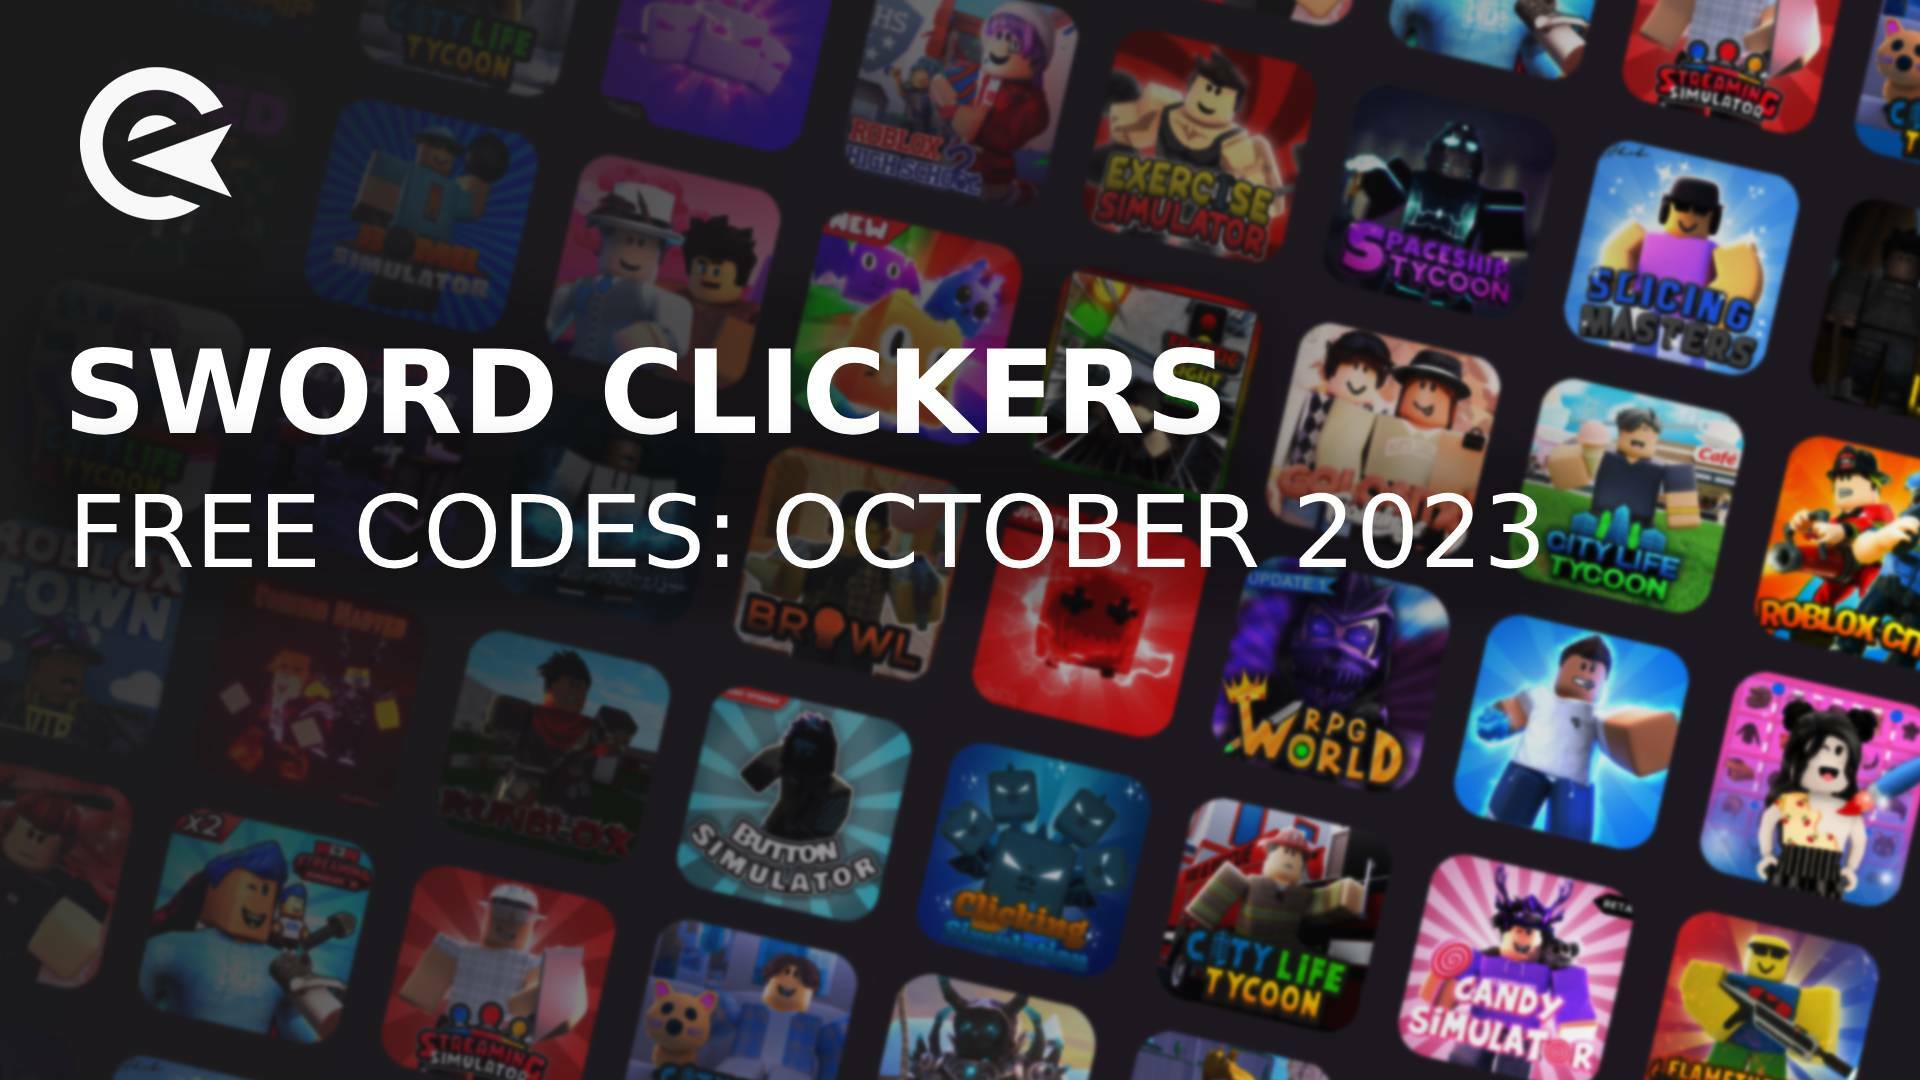 Sword Clickers Simulator Codes For December 2023